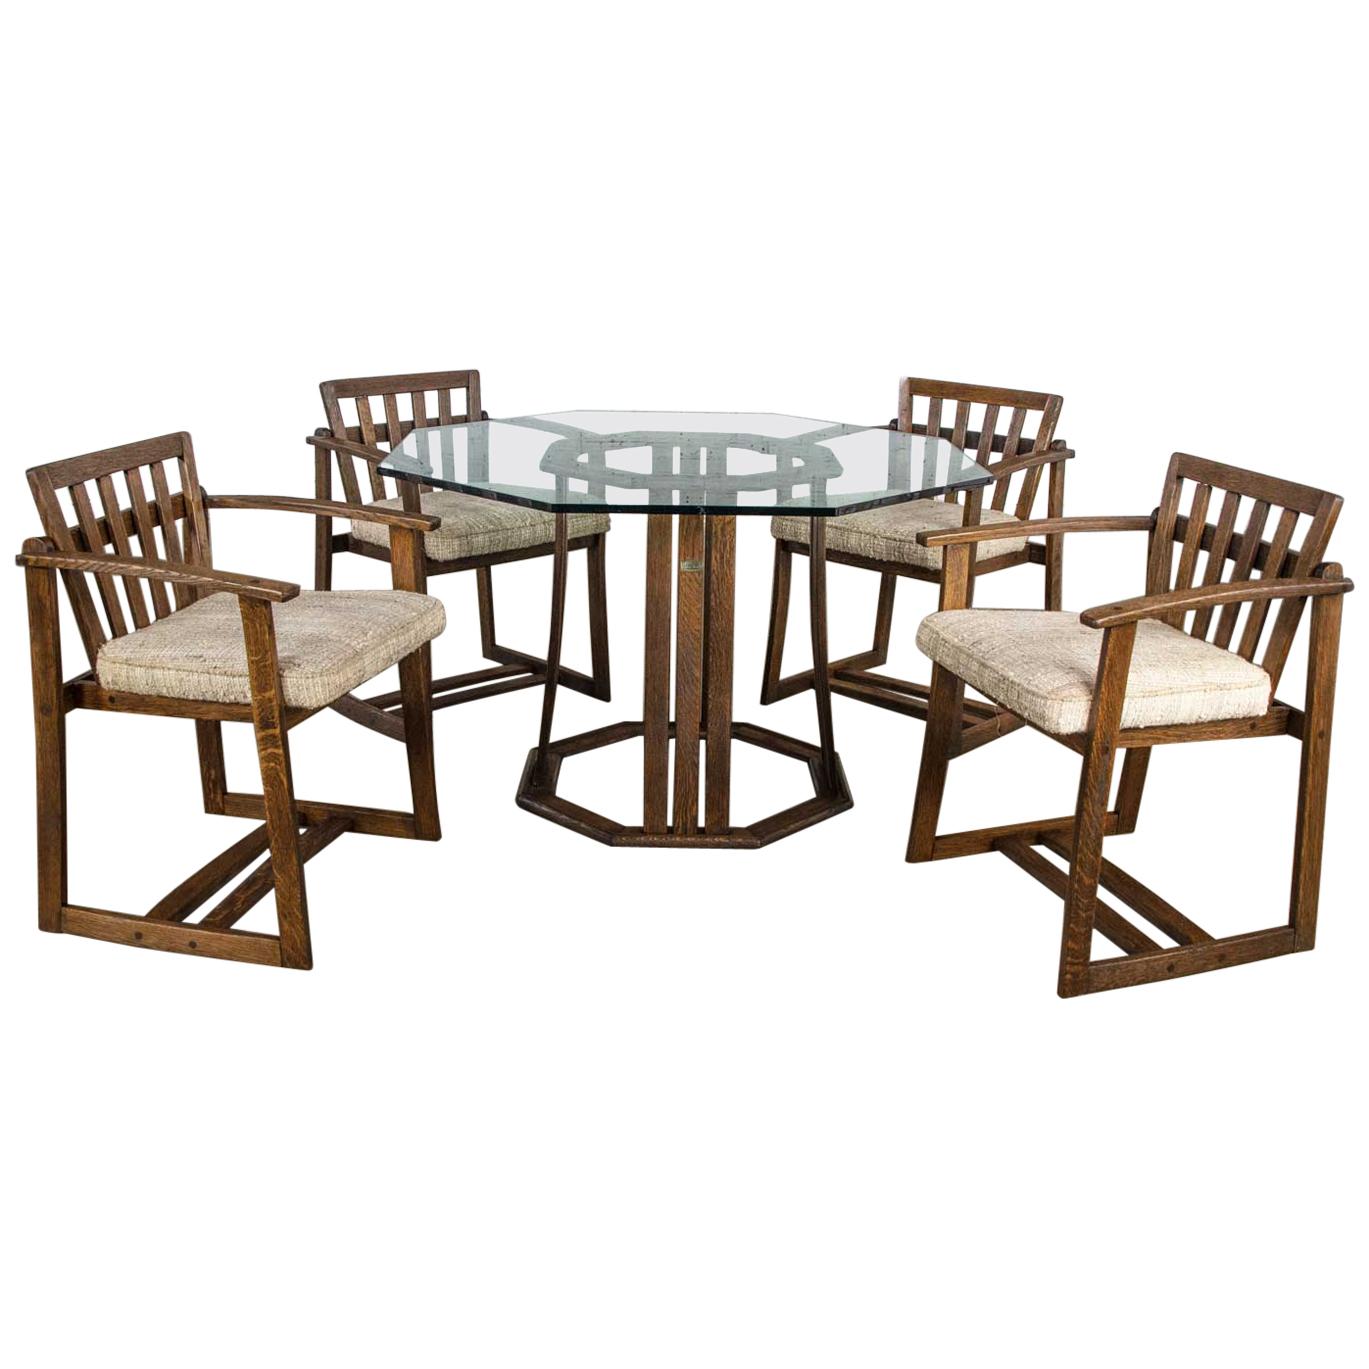 StavOak Dining Game Table & 4 Chairs Jack Daniels’ Barrel Staves Jobie G Redmond For Sale